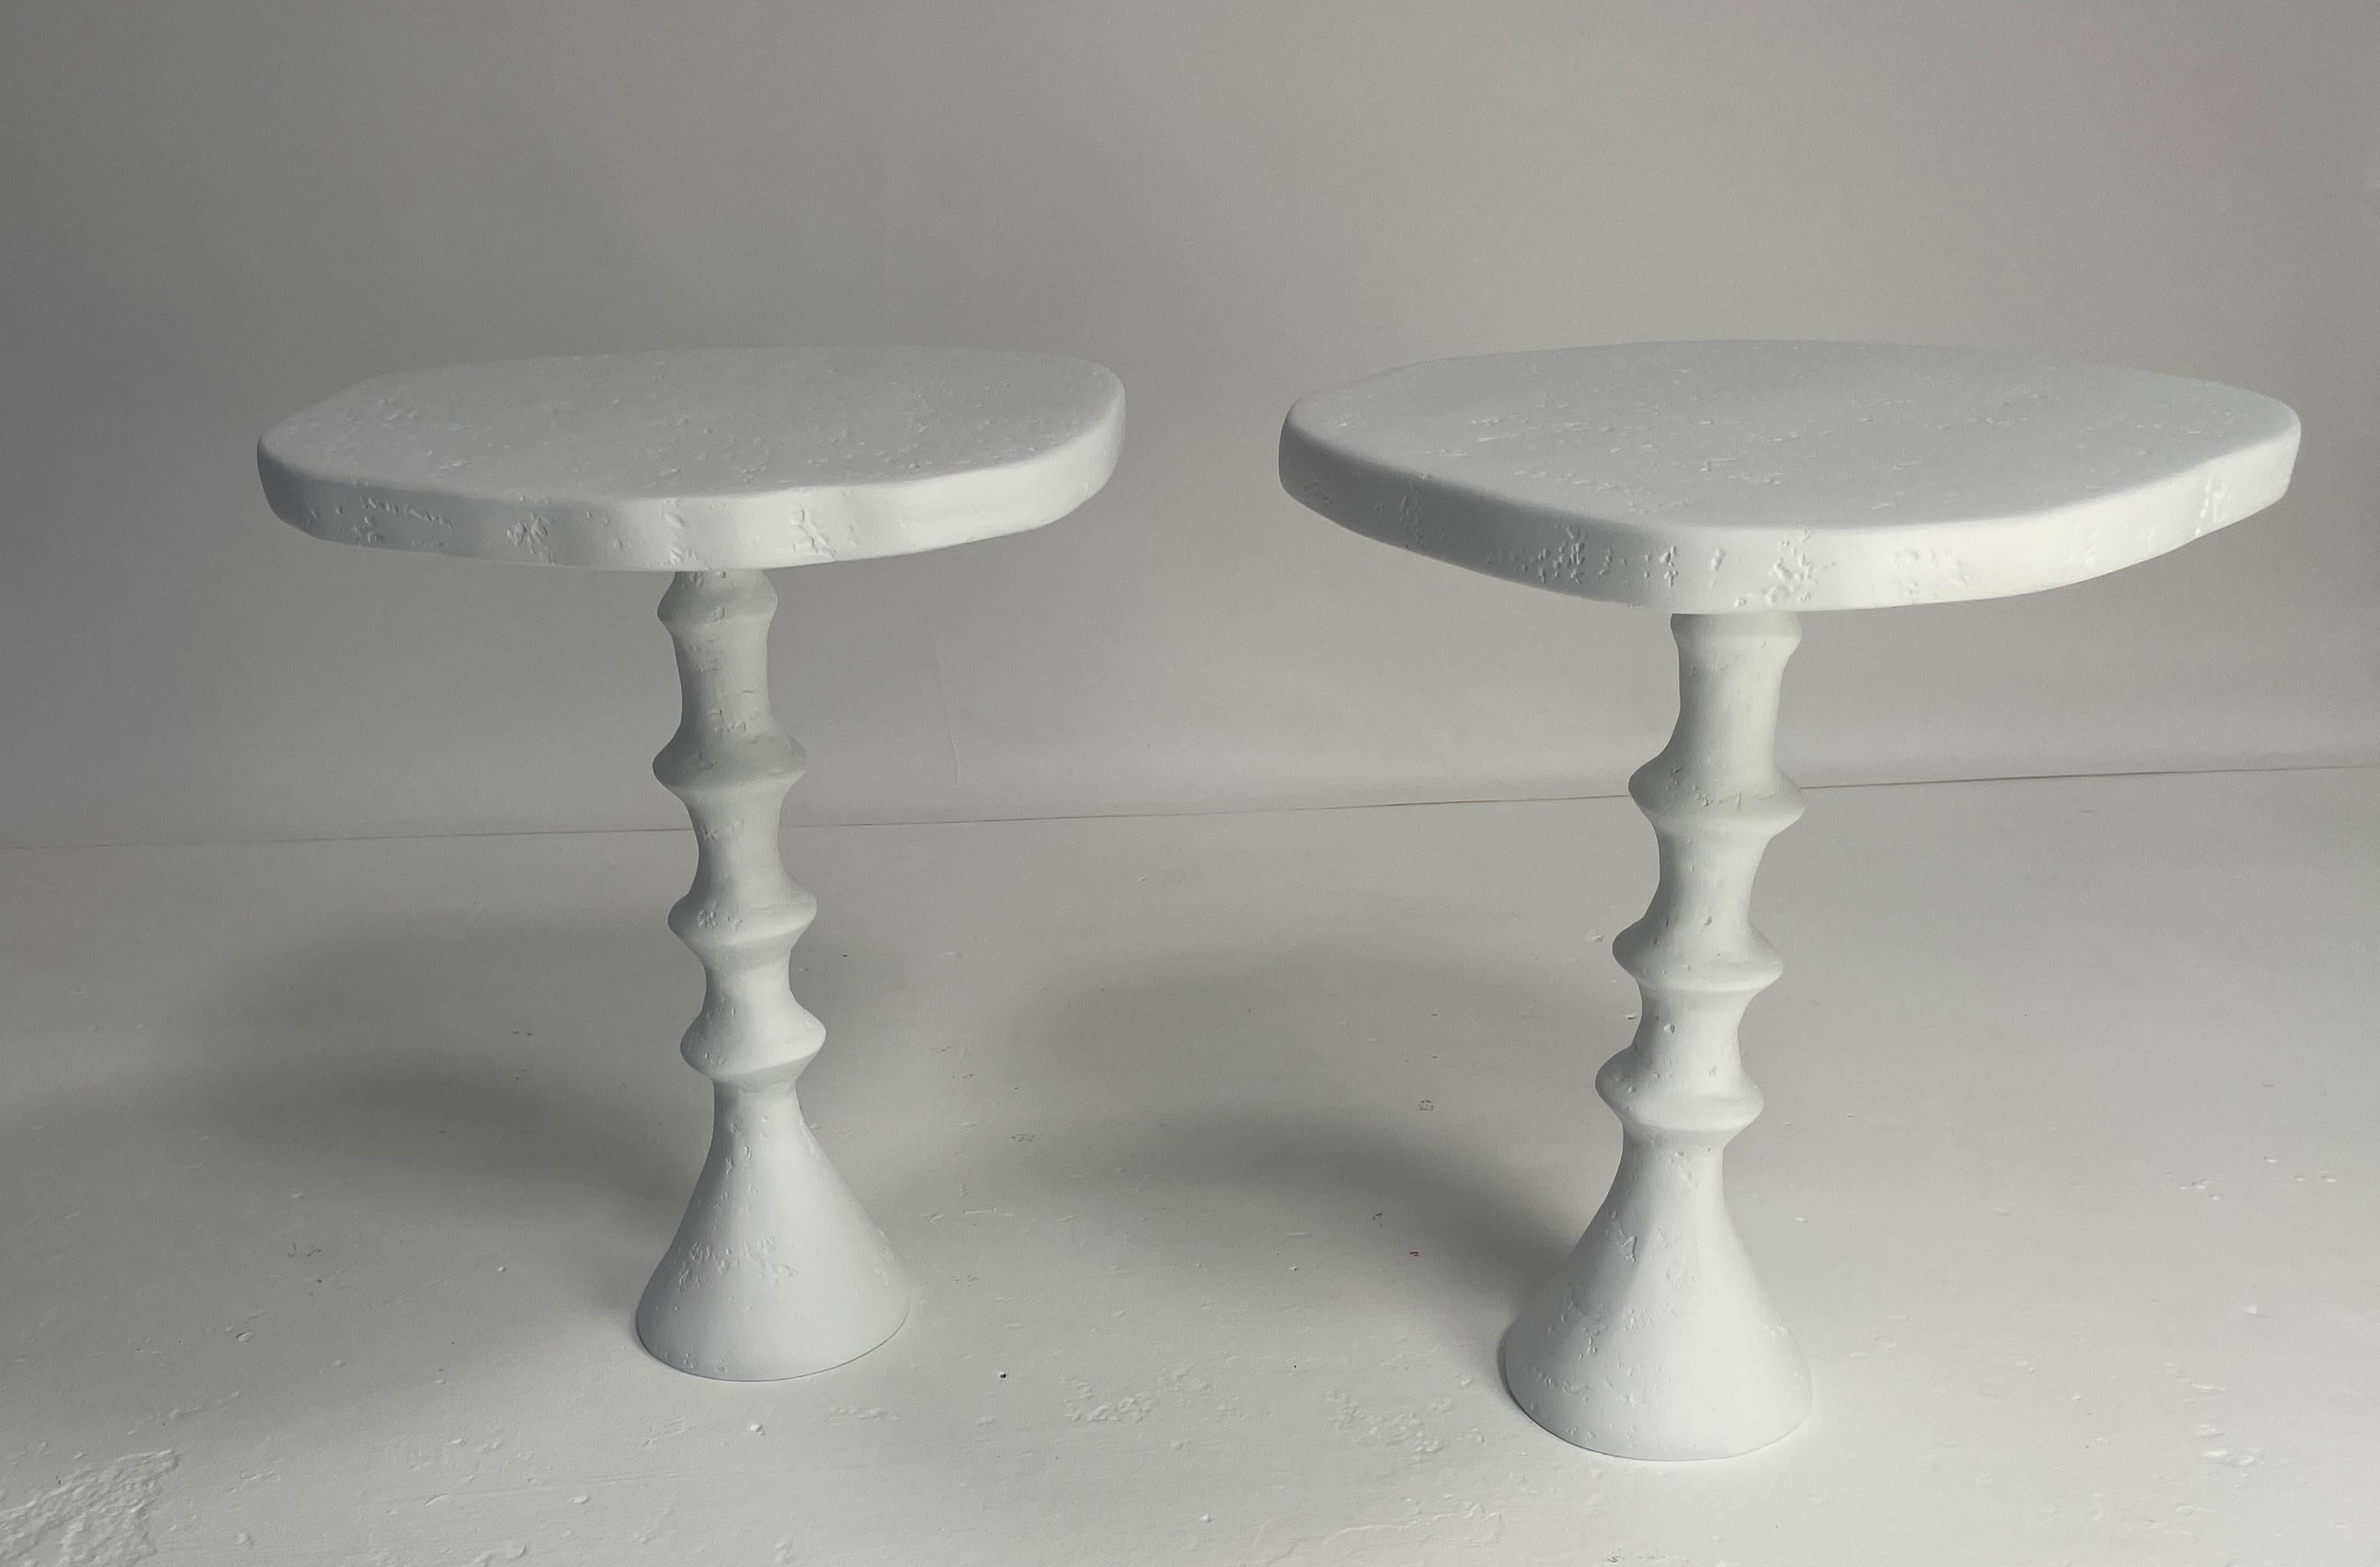 Contemporary Pair of St Paul Plaster Side Table by Bourgeois Boheme Atelier 'Petit Modèle' For Sale